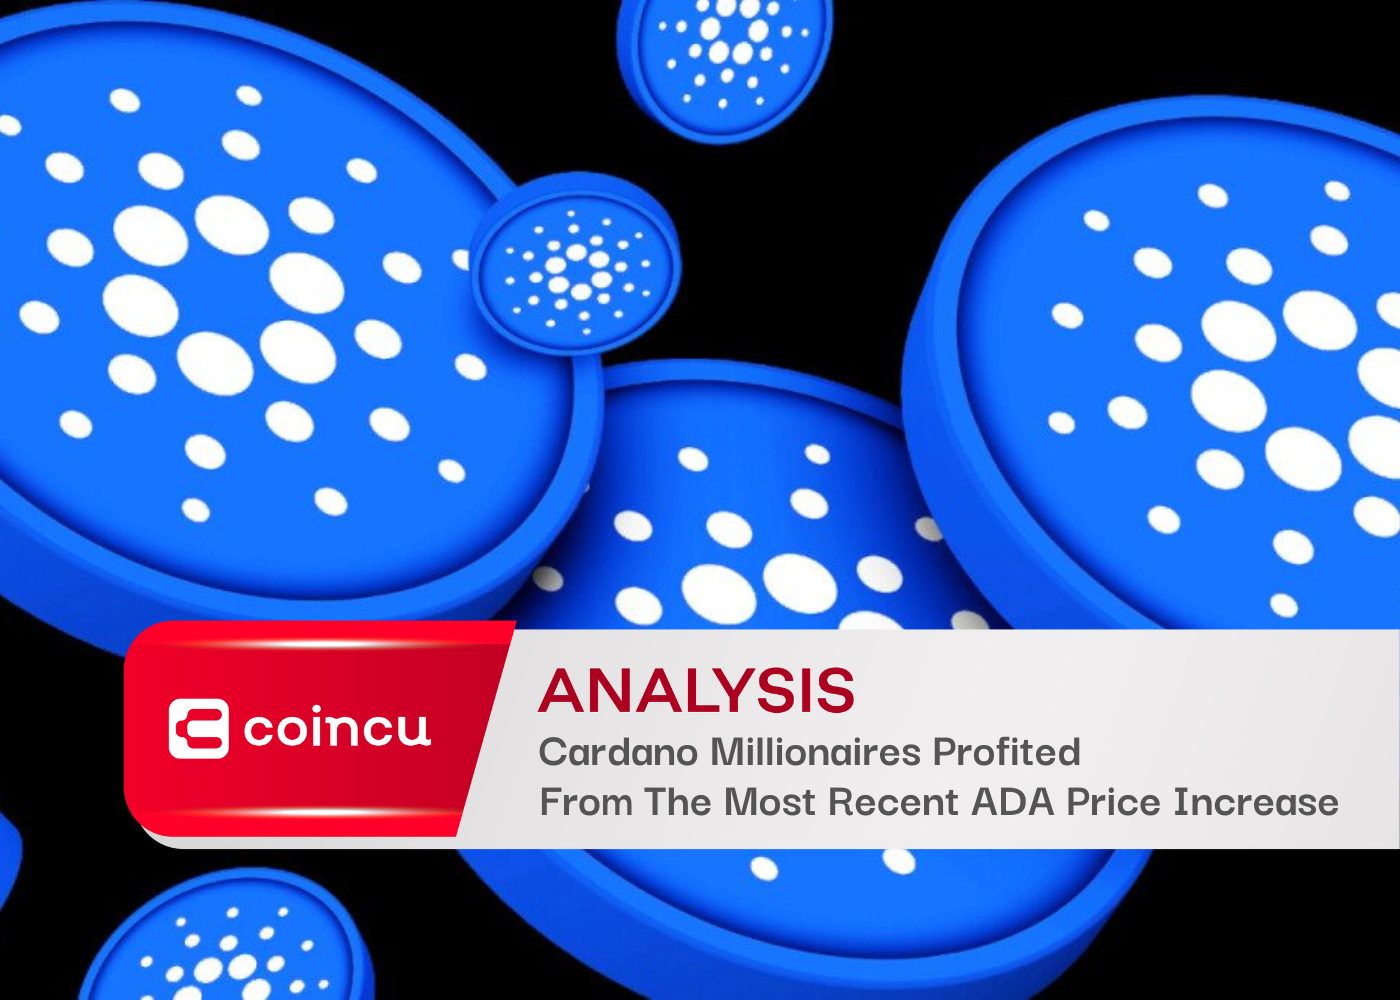 Cardano Millionaires Profited